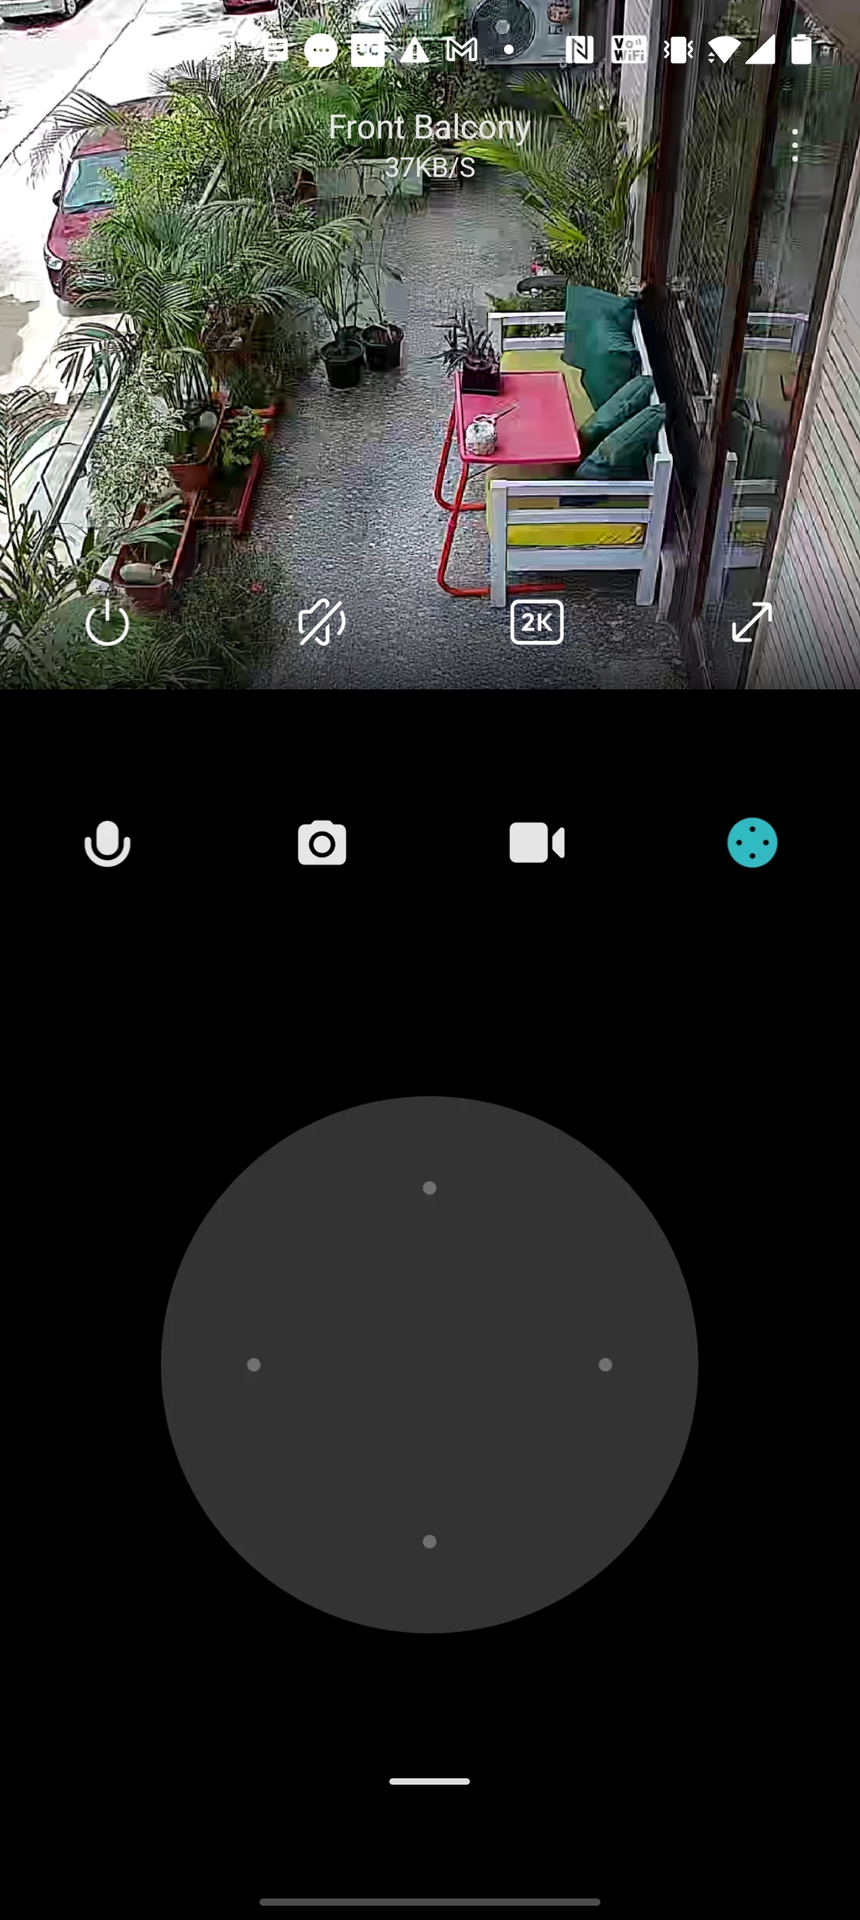 Mi 360 security camera app controls